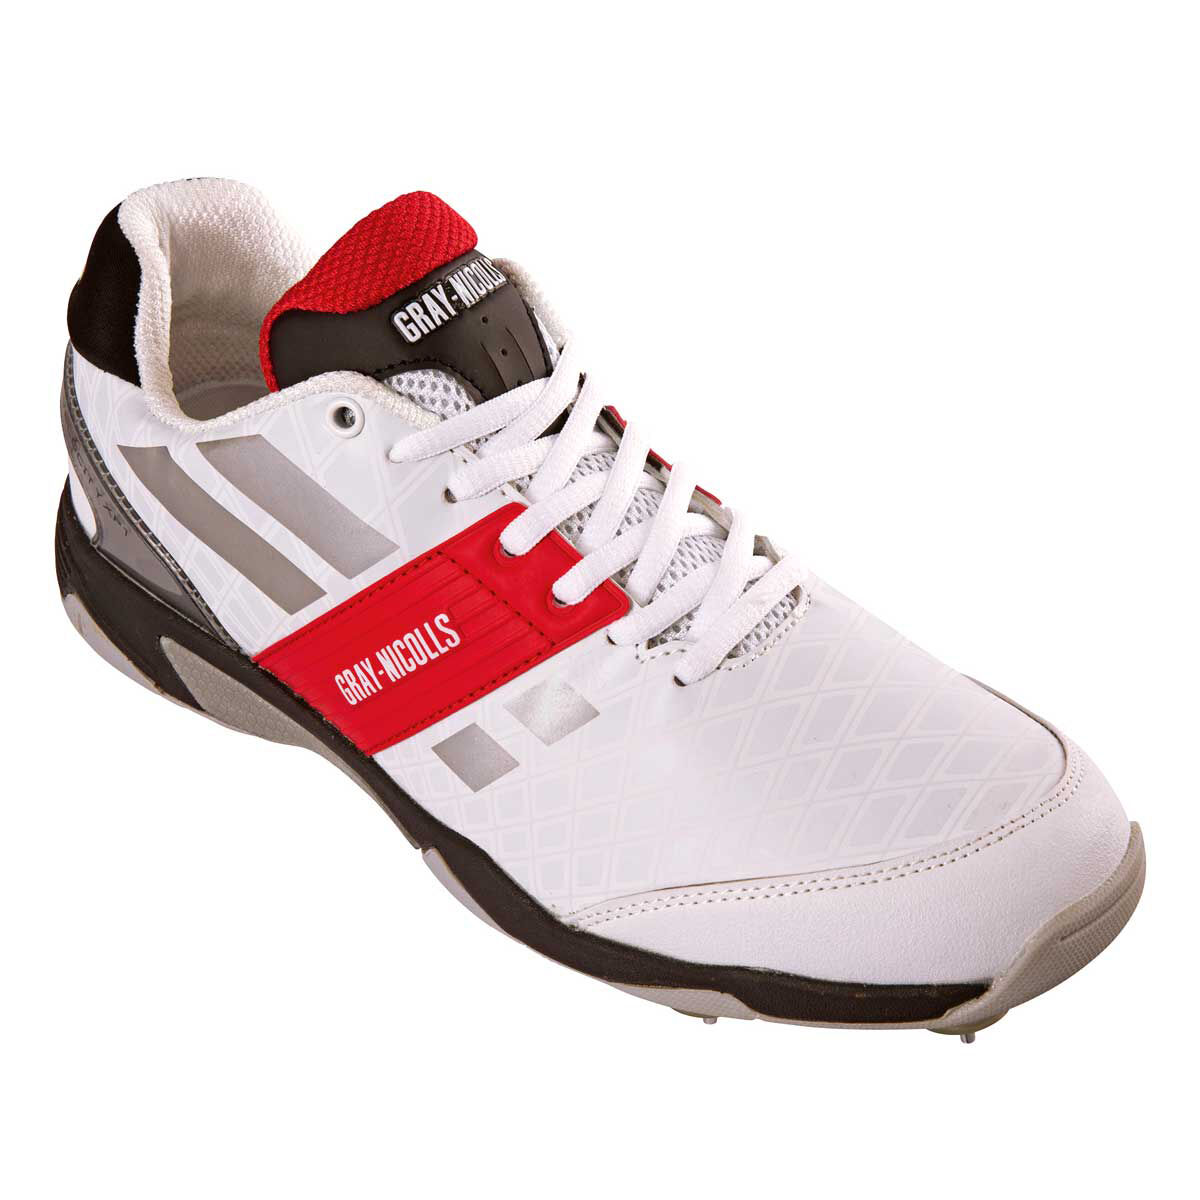 gray nicolls velocity 2. rubber sole cricket shoe